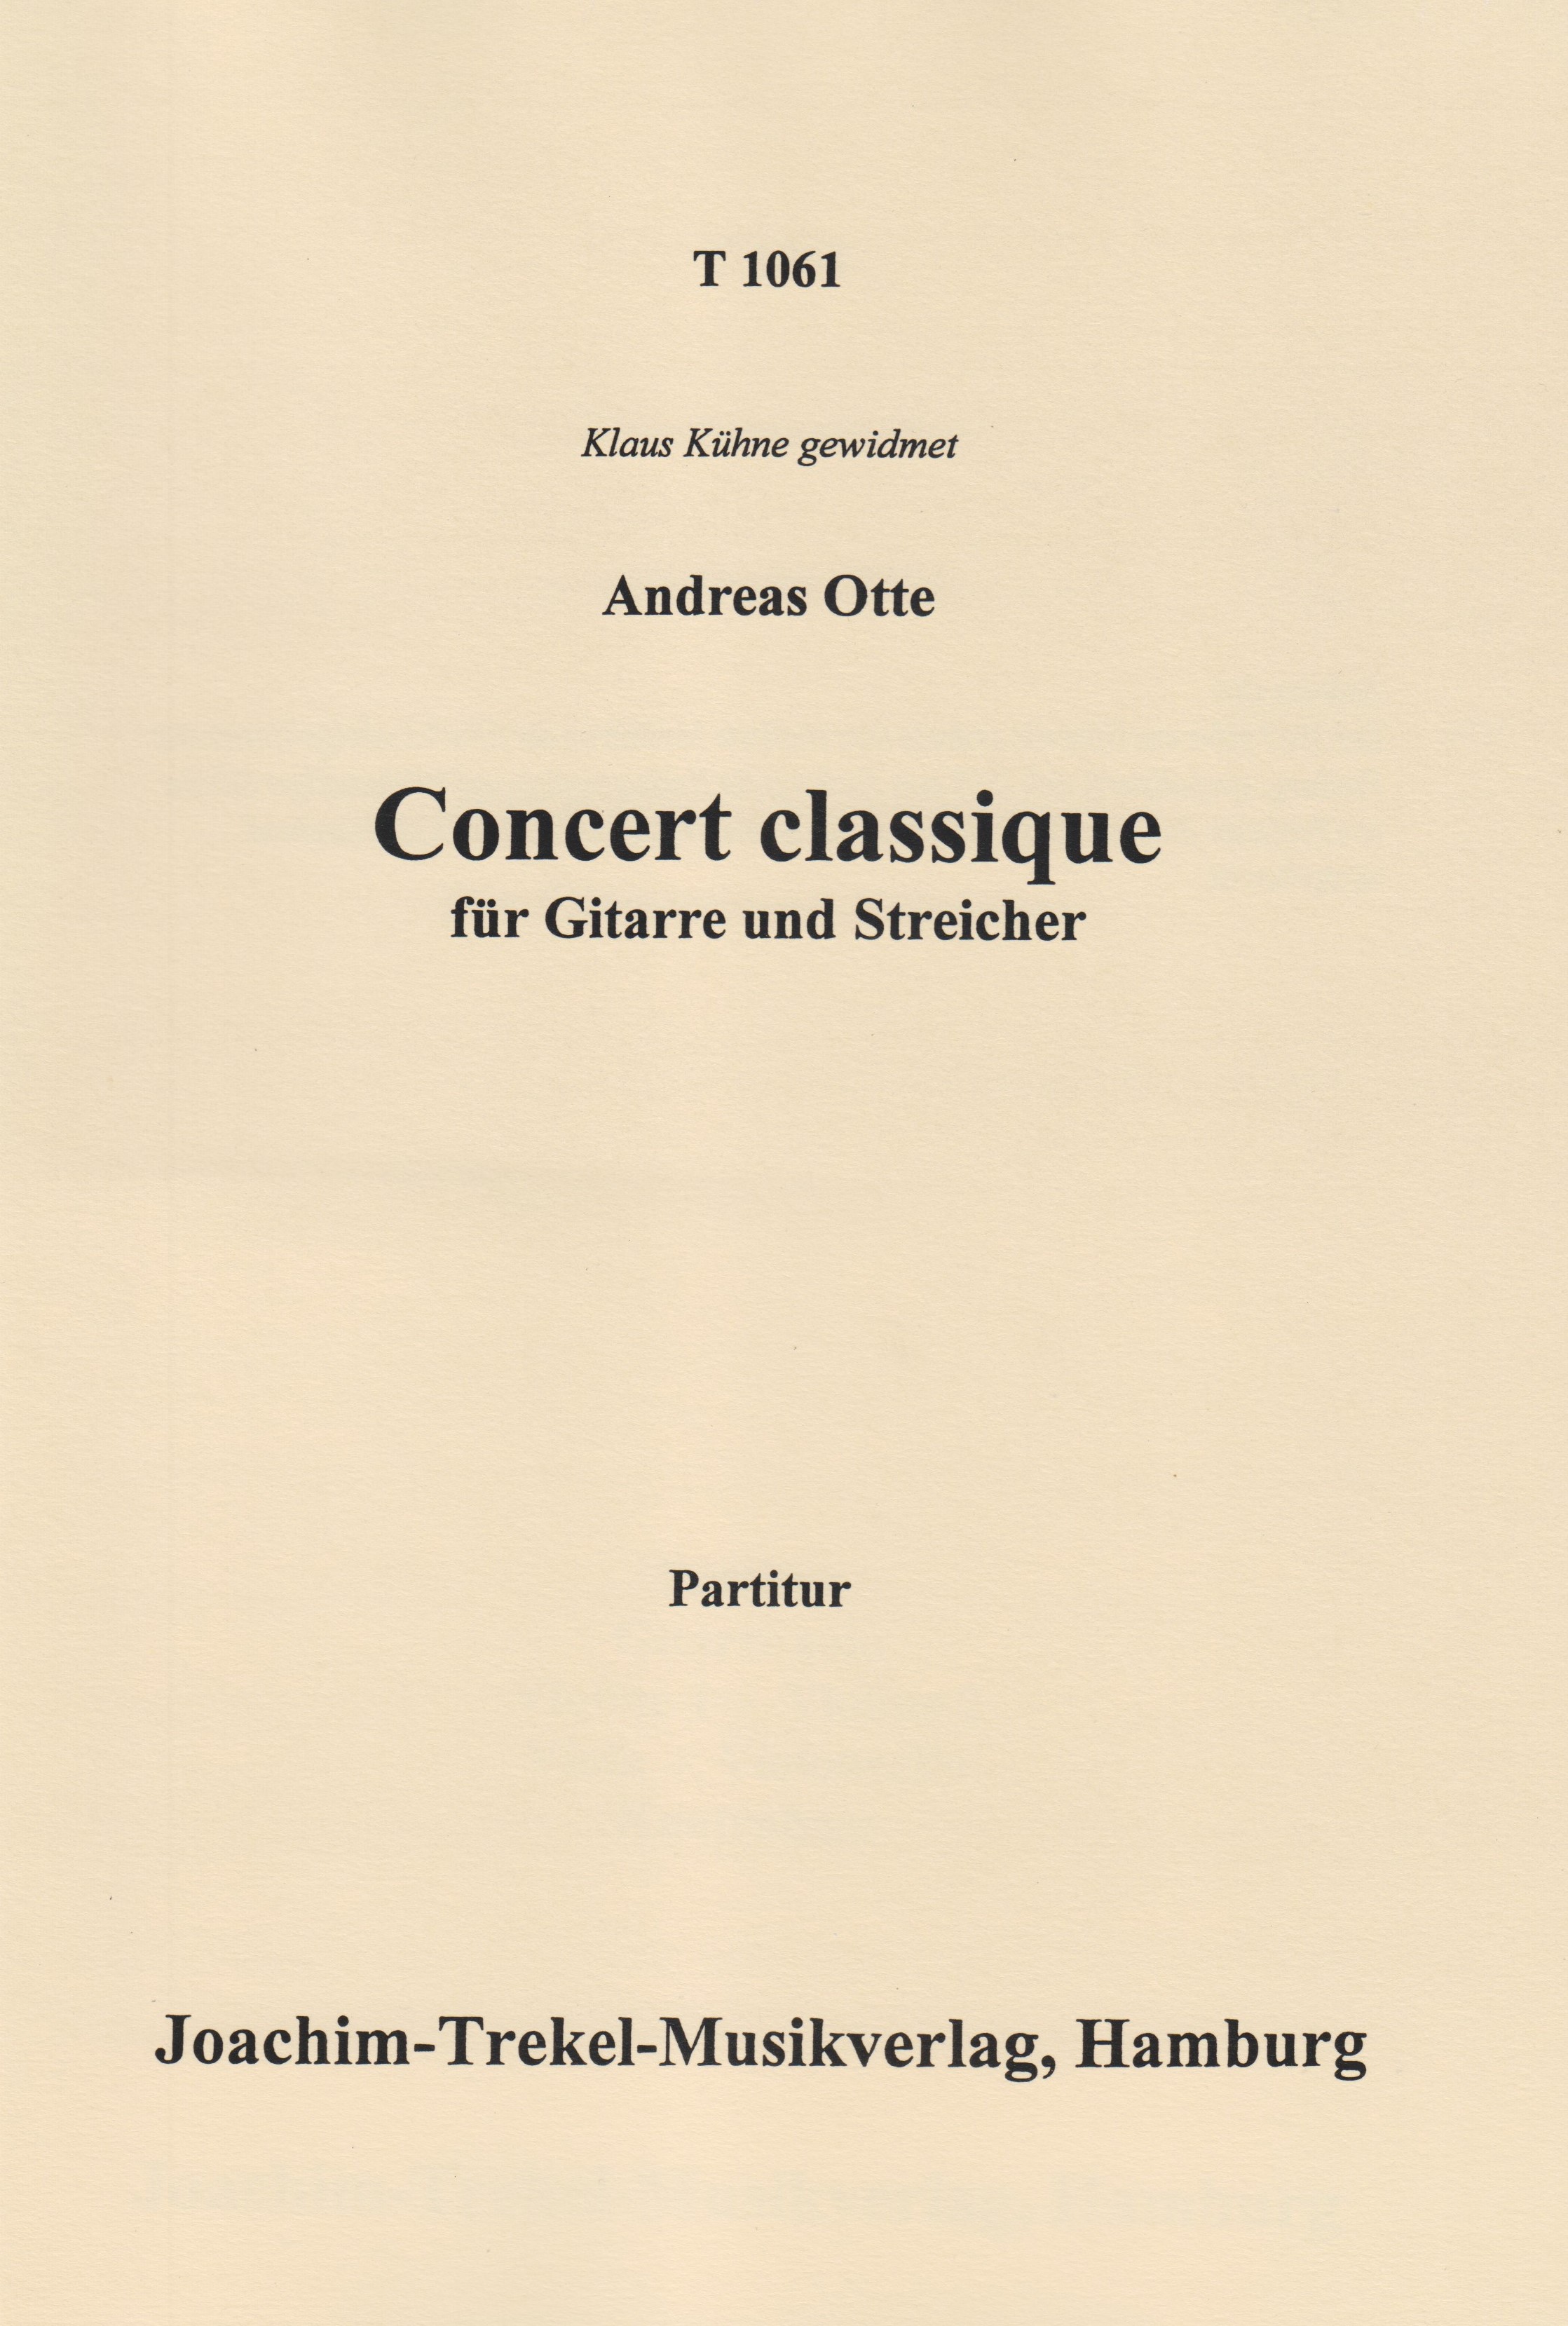 Concert classique